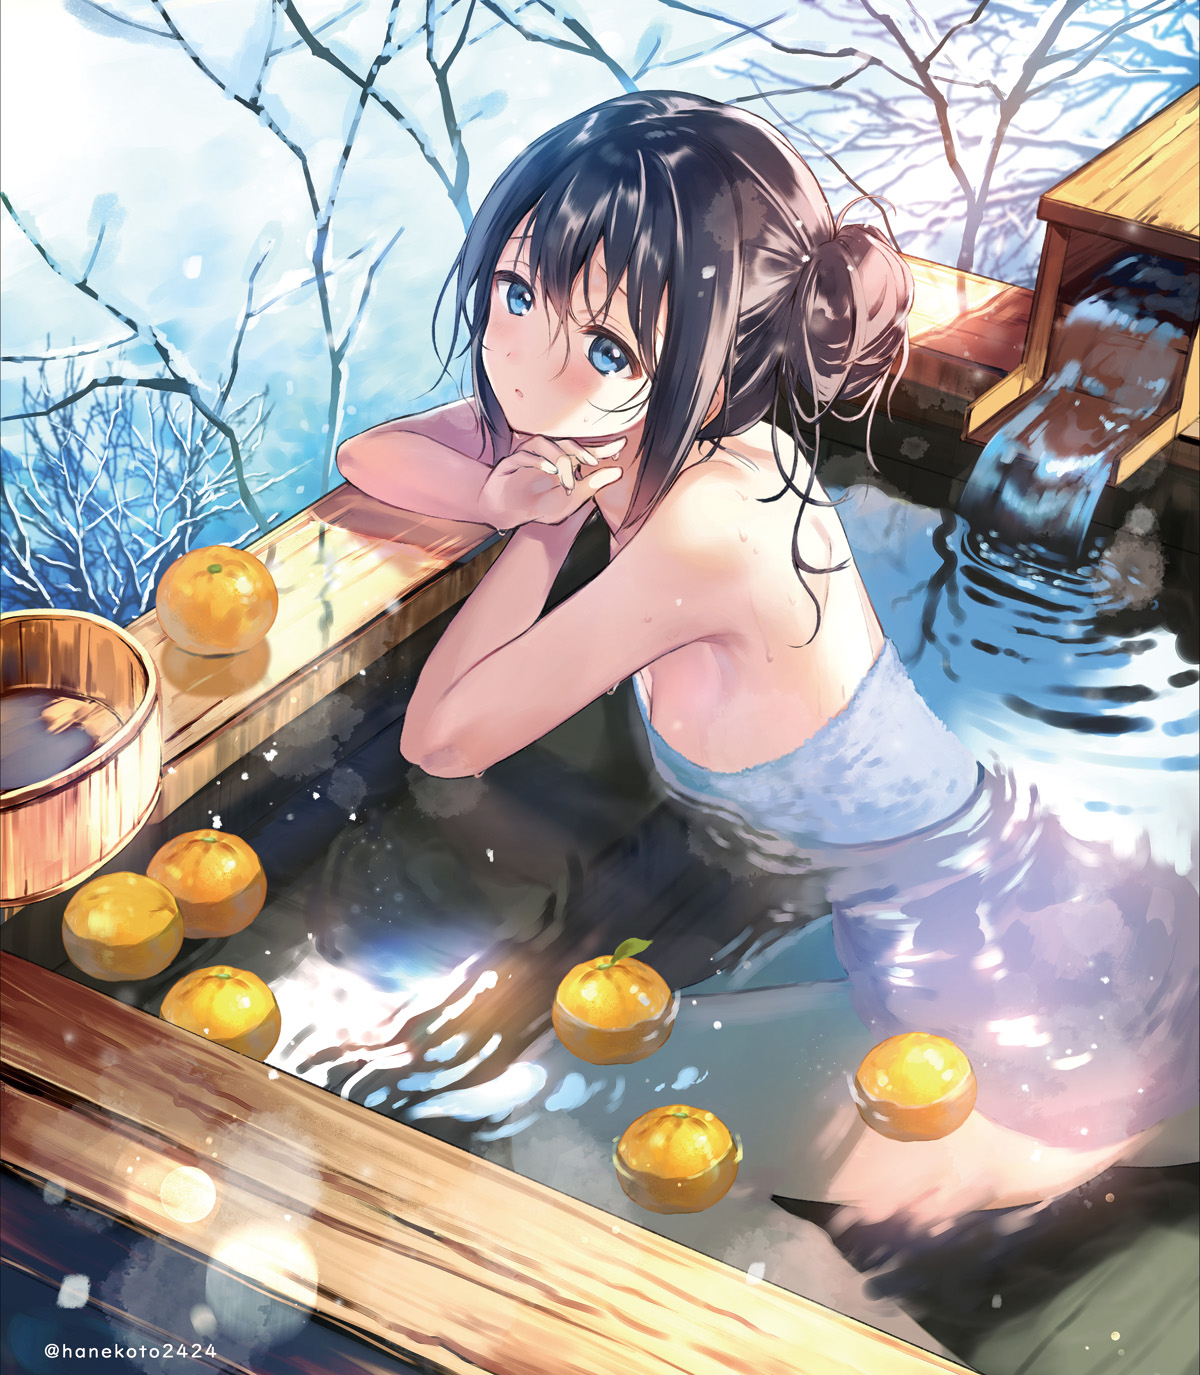 Anime 1200x1375 anime anime girls digital art artwork 2D portrait display in bathtub fruit blue eyes water outdoors dark hair towel bathing sideboob Hanekoto orange (fruit) hot tub